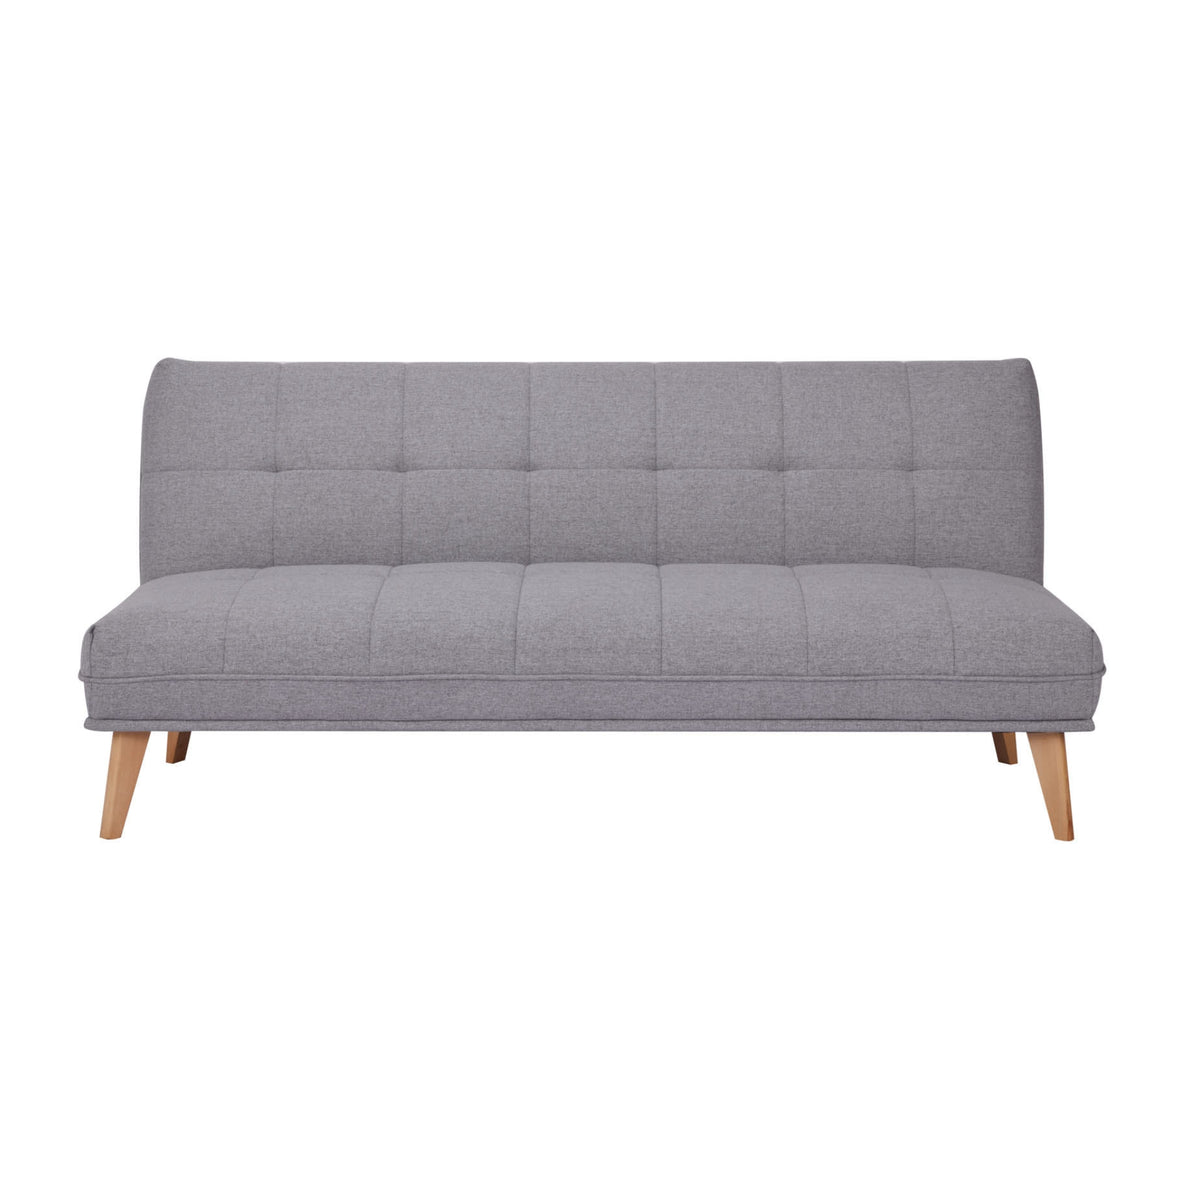 Jovie 3 Seater Fabric Sofa Bed Light Grey 